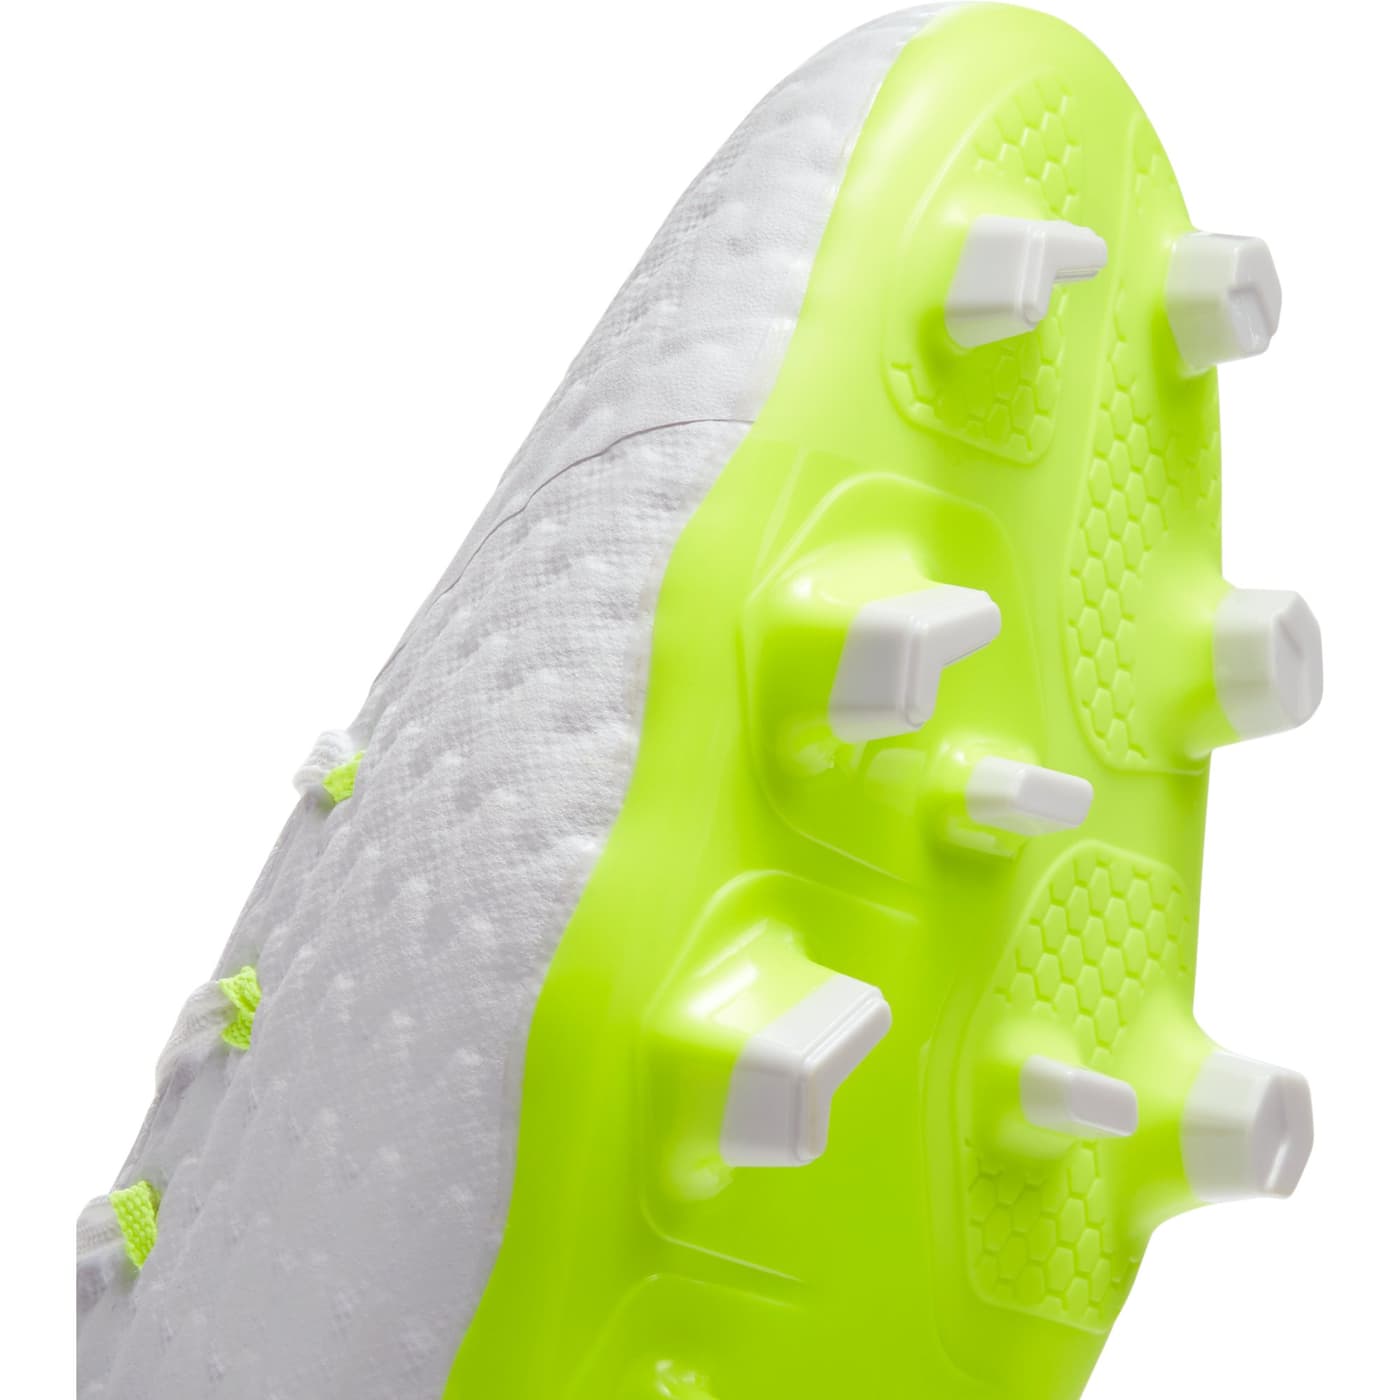 $250 Nike Hypervenom Phantom III FG Soccer Cleats Boots